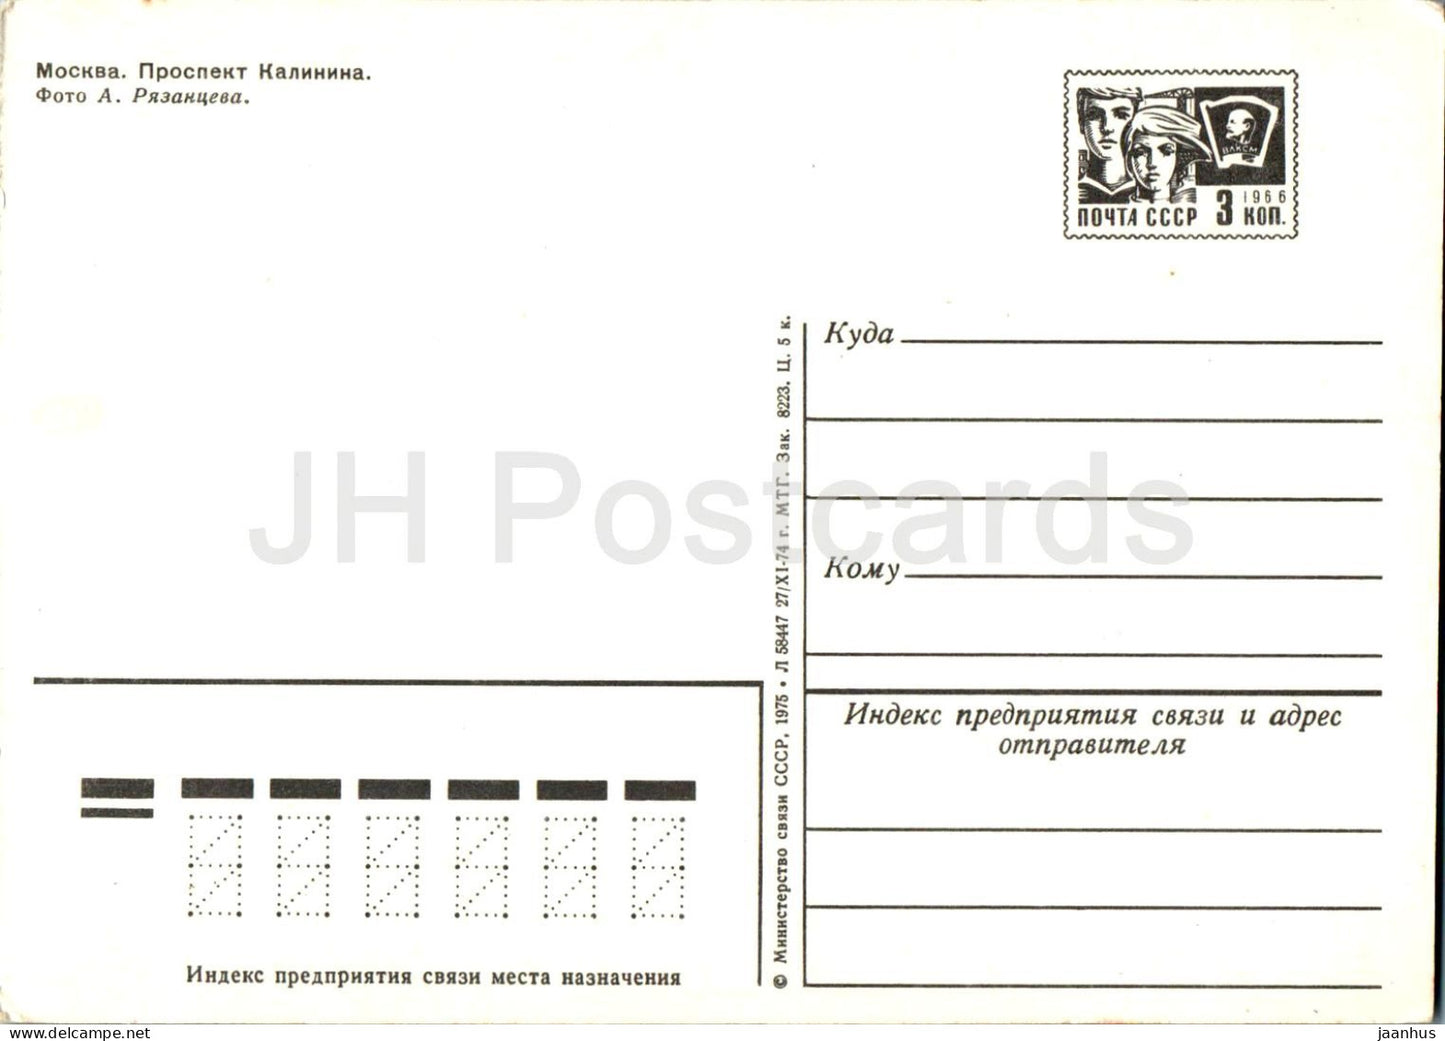 Moscow - Kalinin prospekt - avenue - bus - postal stationery - 1975 - Russia USSR - unused